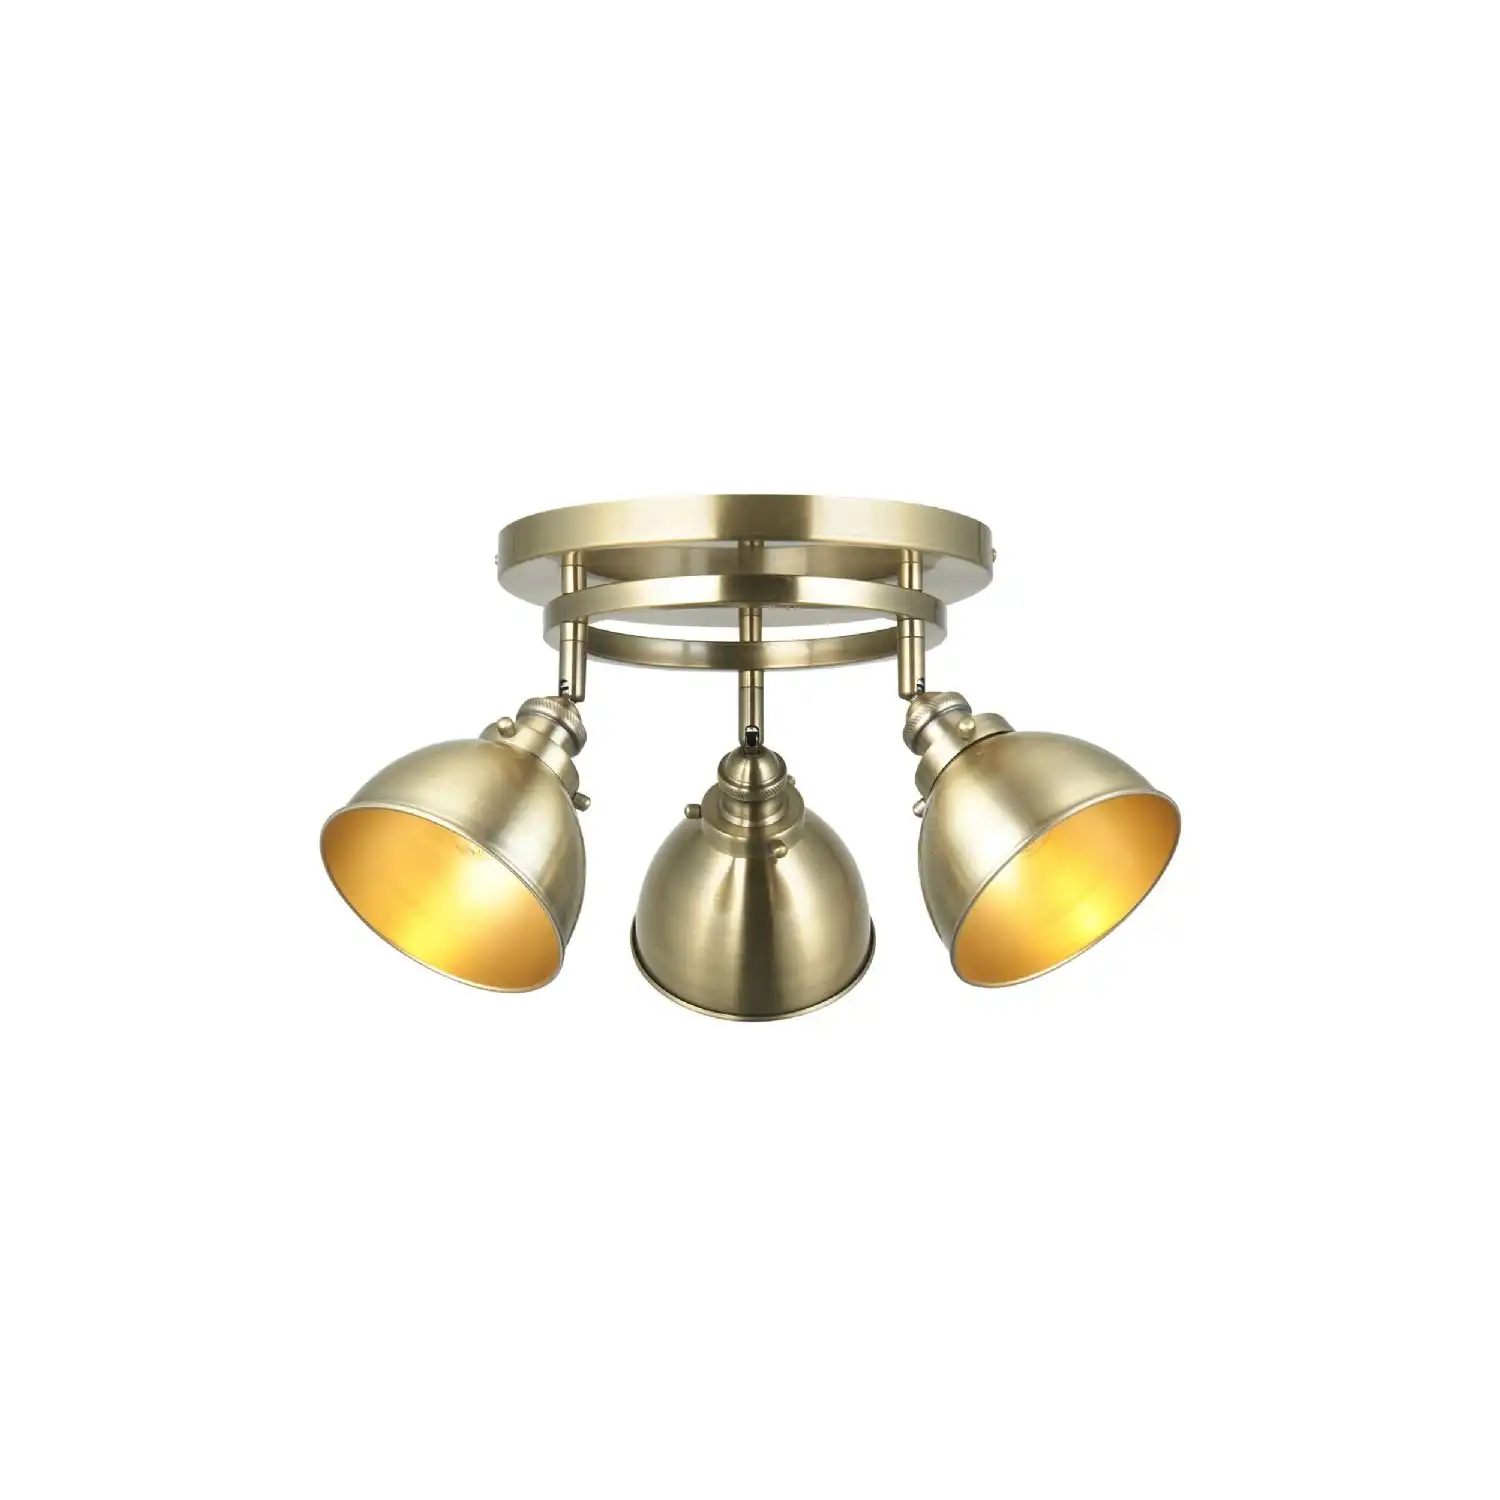 3 Round Ceiling Light Brass